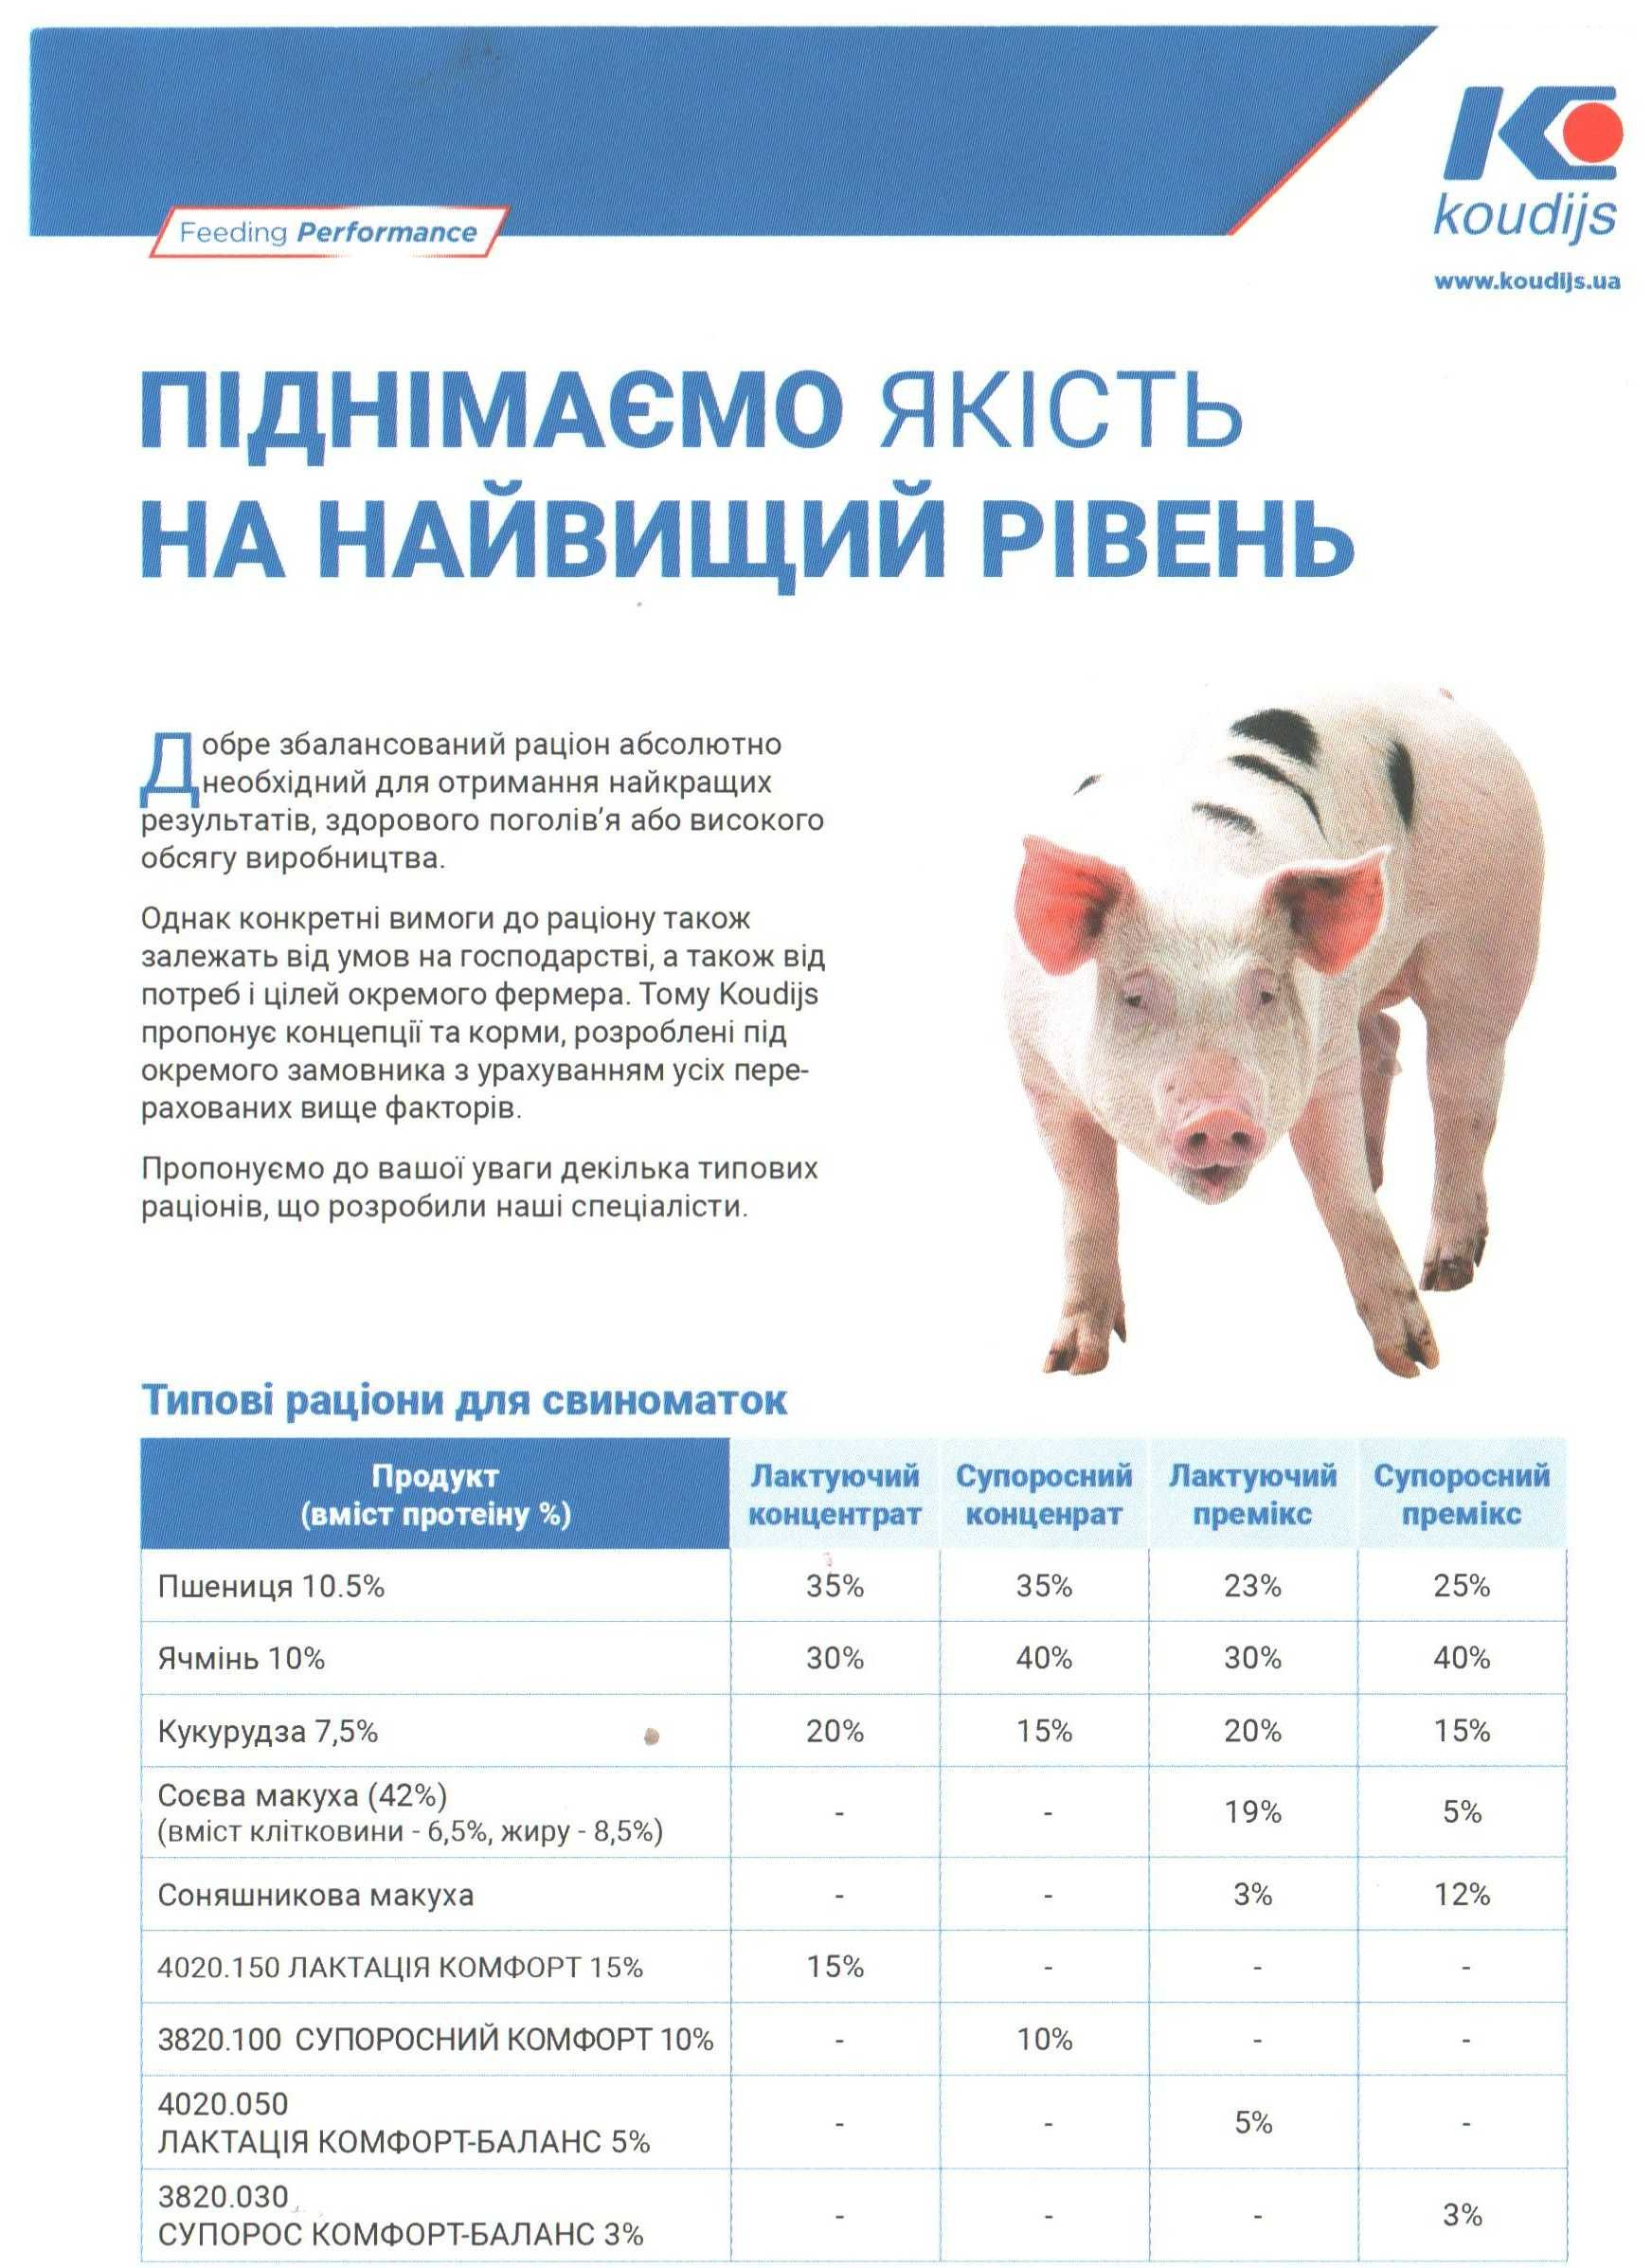 Концентрат 15% для лактуючих свиноматок, Коудайс  (4020.150 Комфорт)